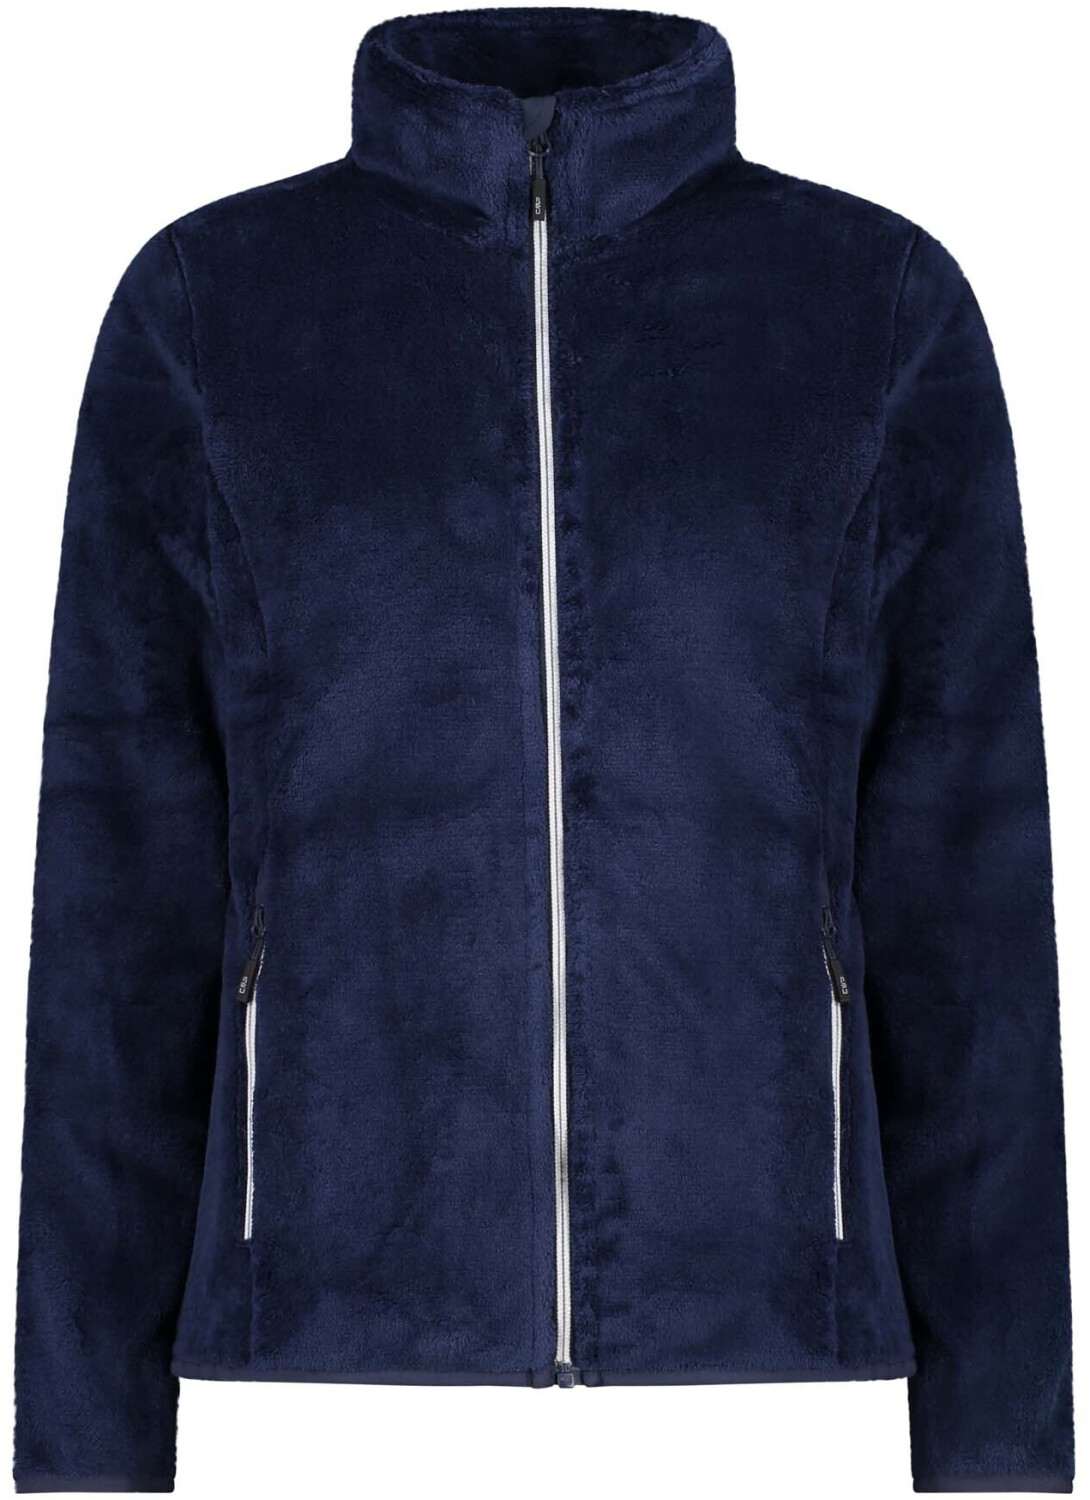 b.blue/bianco Jacket Women € Fleece | bei 34,98 CMP ab (38P1536) Preisvergleich